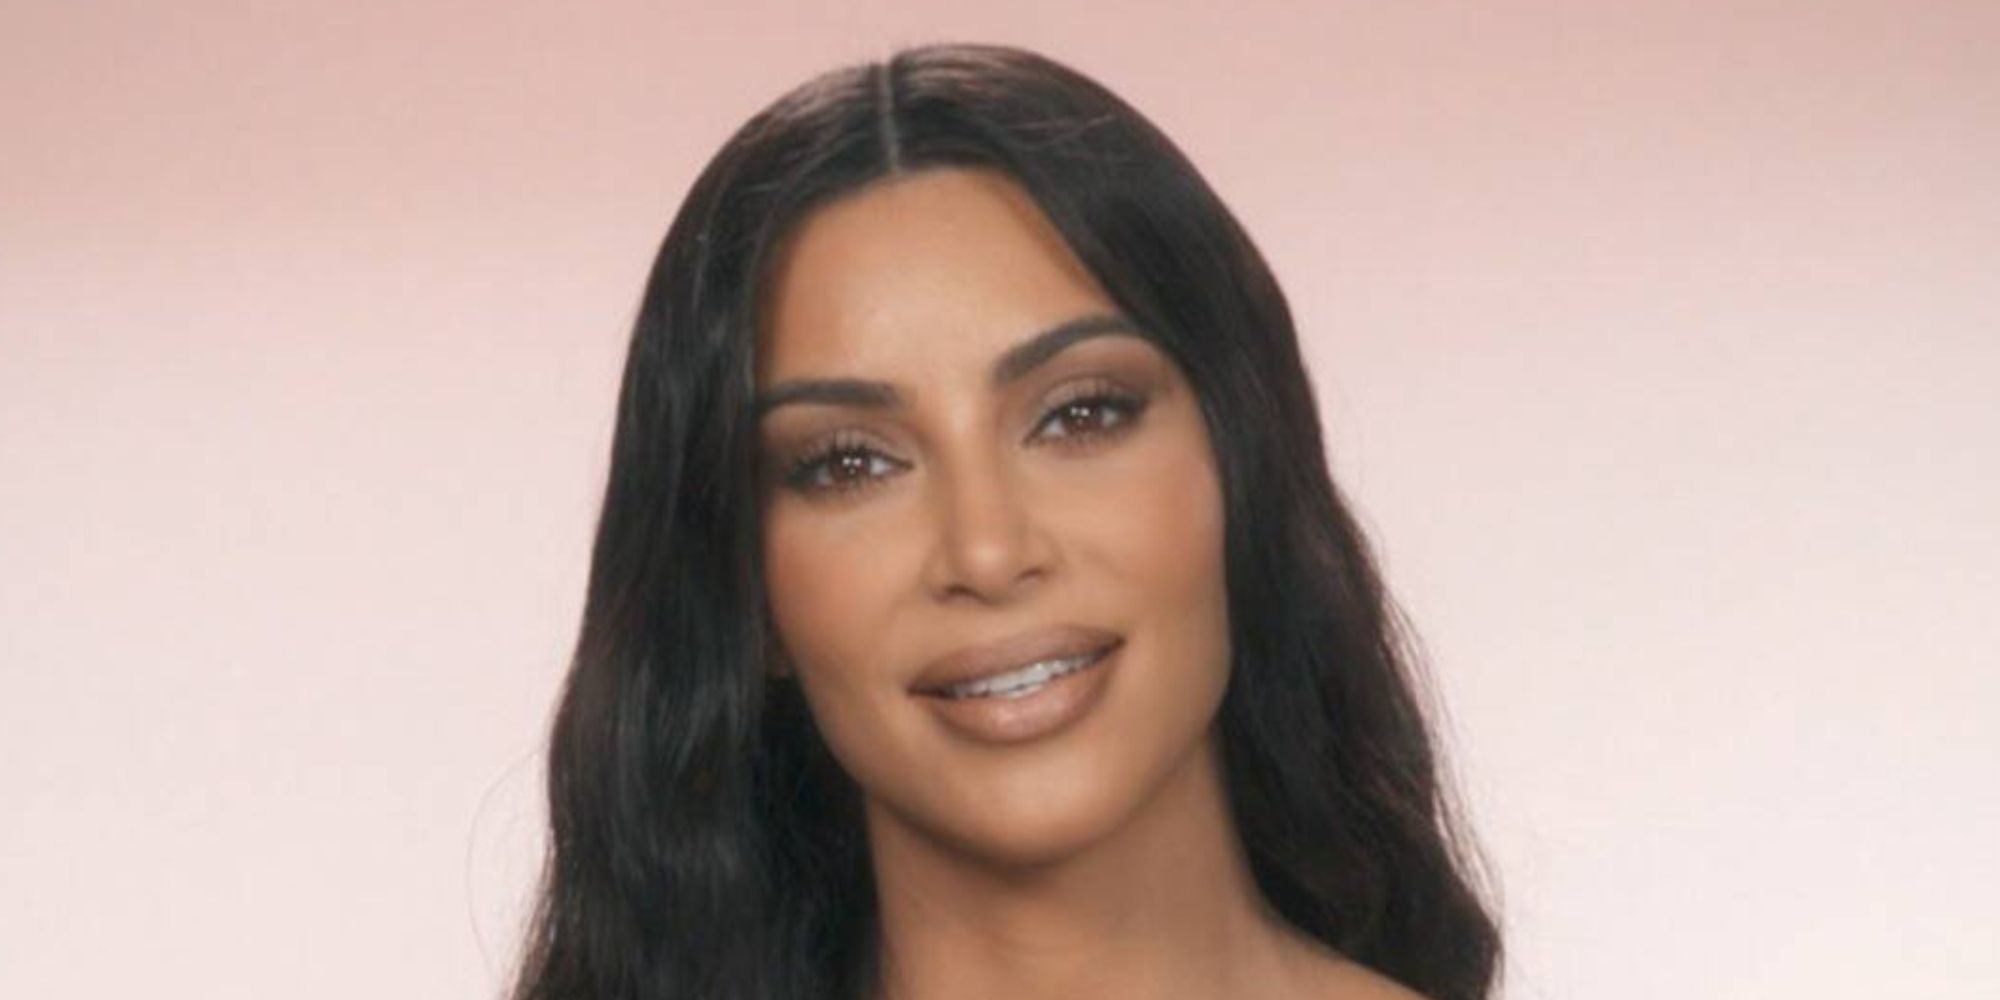 KUWTK: Kim ‘Disturbed’ By Caitlyn Jenner’s Tweet on Prison Reform